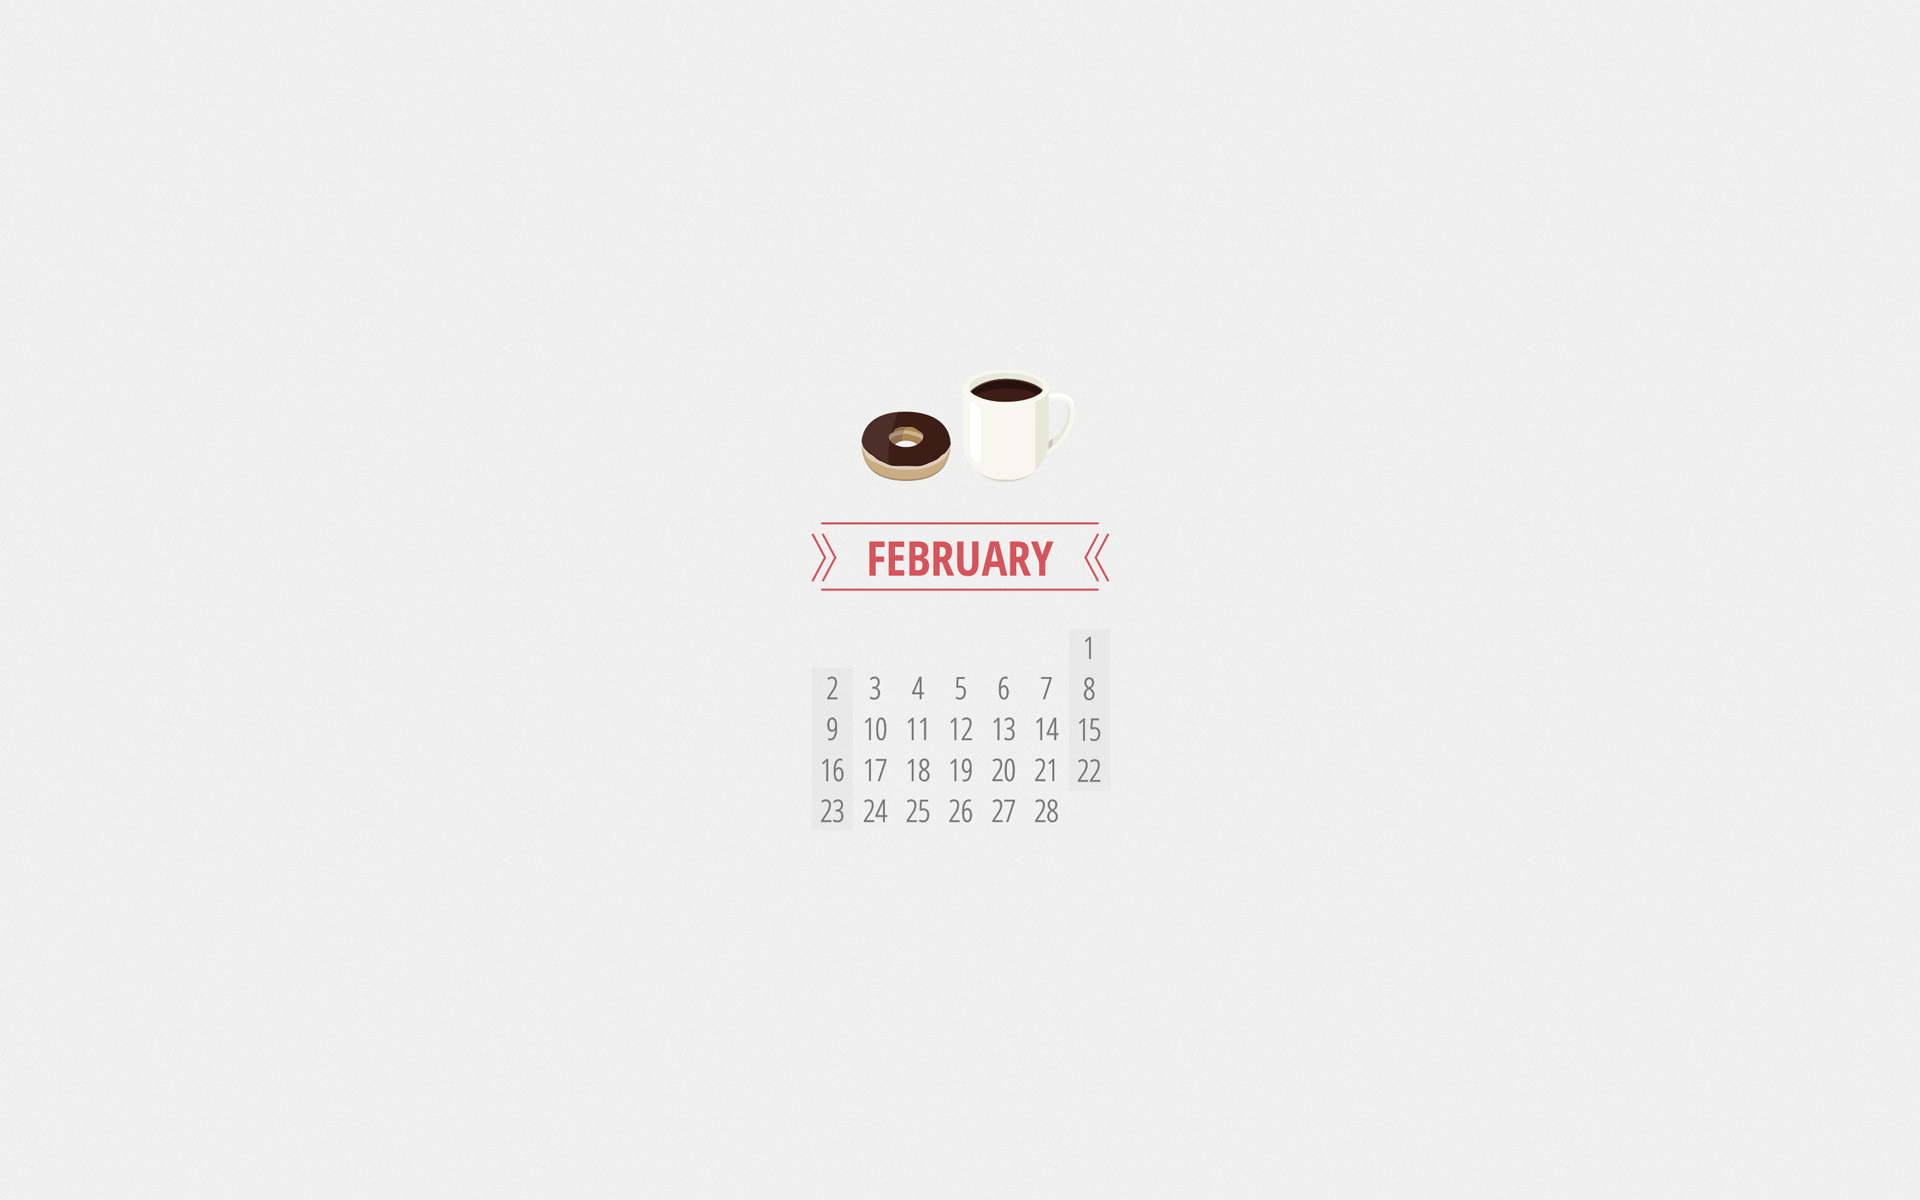 February 2014 Desktop and Mobile Calendar Wallpaper